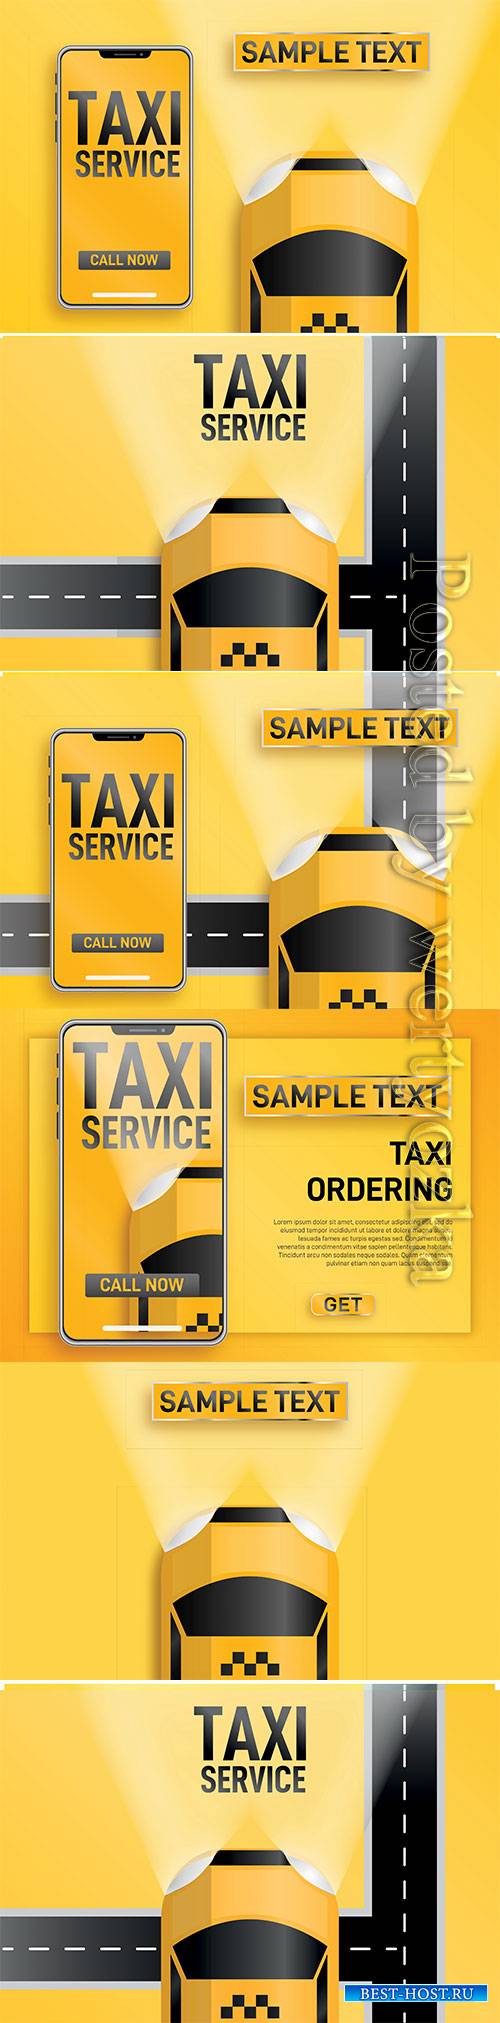 Taxi service online vector illustration